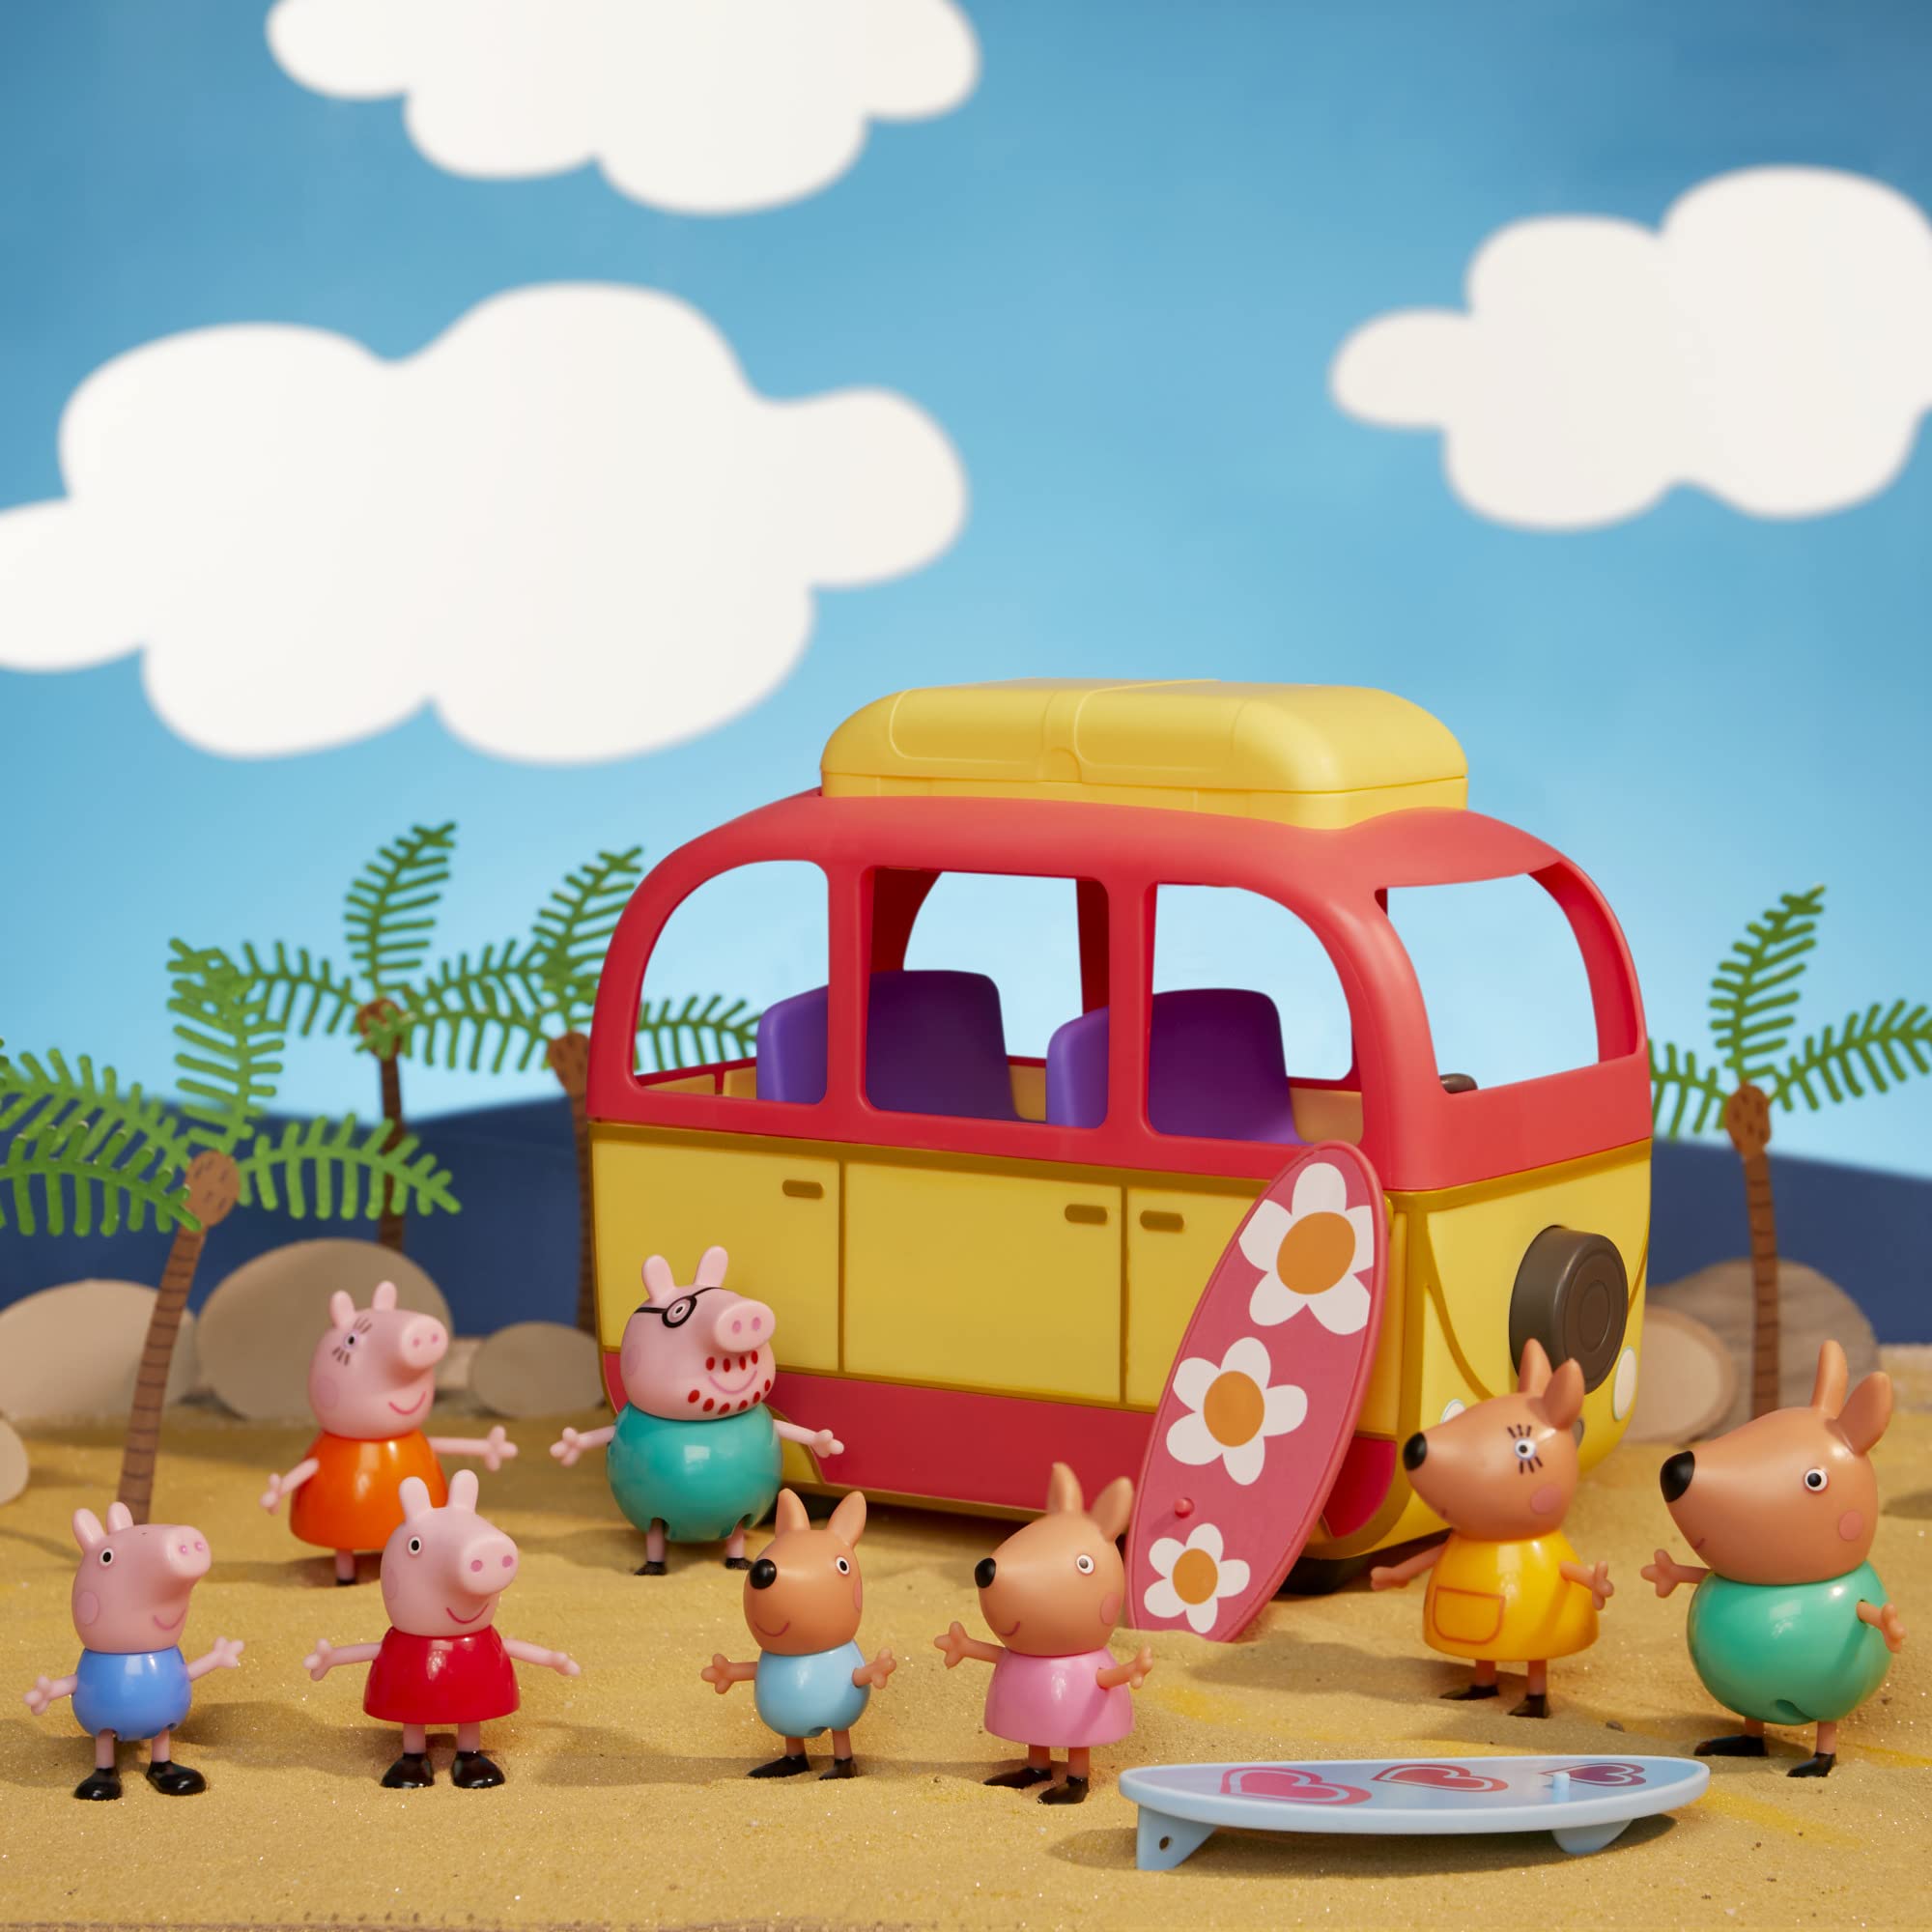 Peppa Pig Peppa Visits Australia Campervan Vehicle Preschool Toy (Amazon Exclusive)